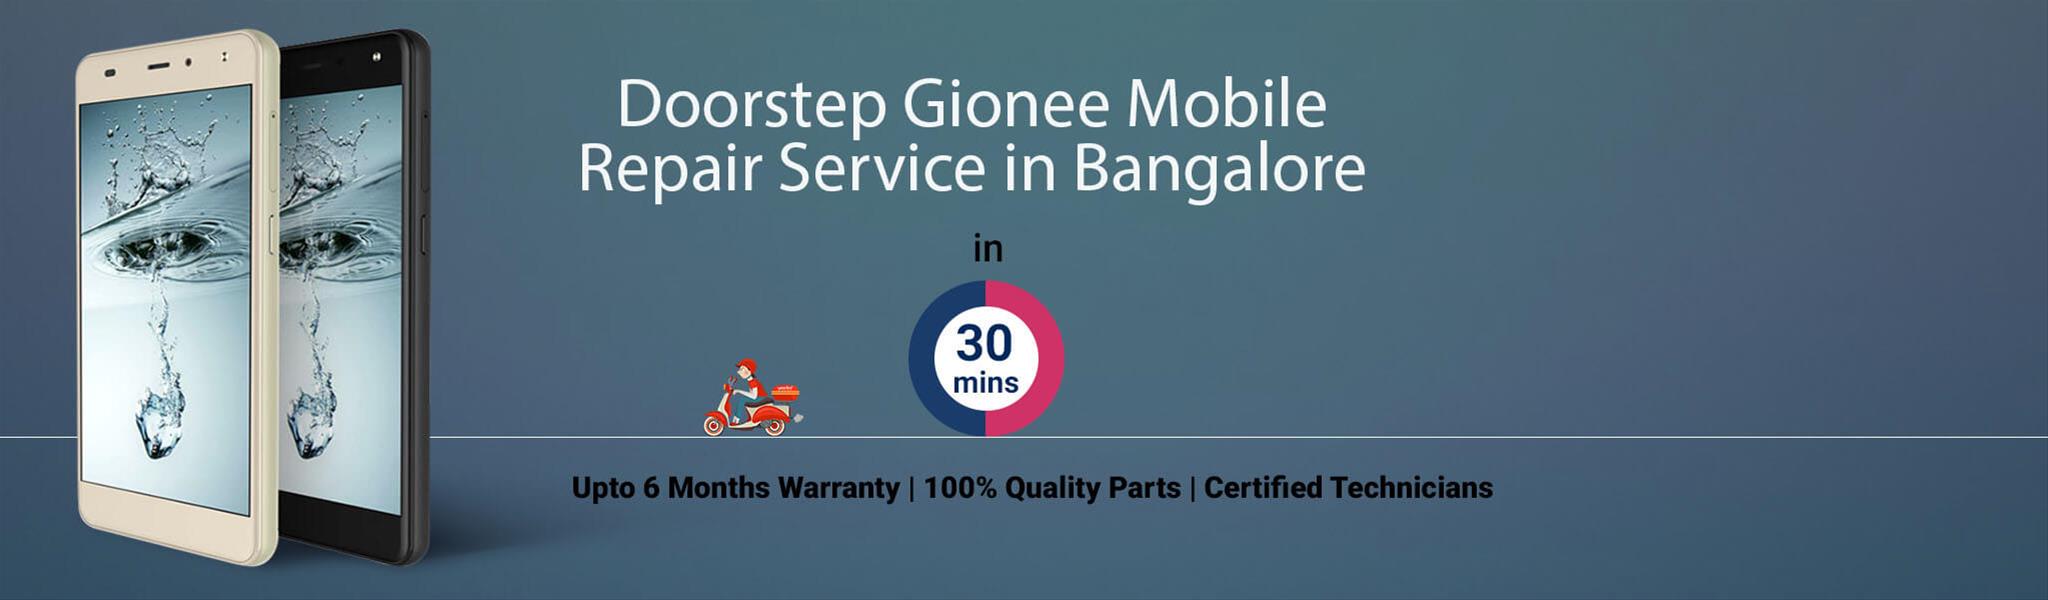 gionee-repair-service-banner-bangalore.jpg